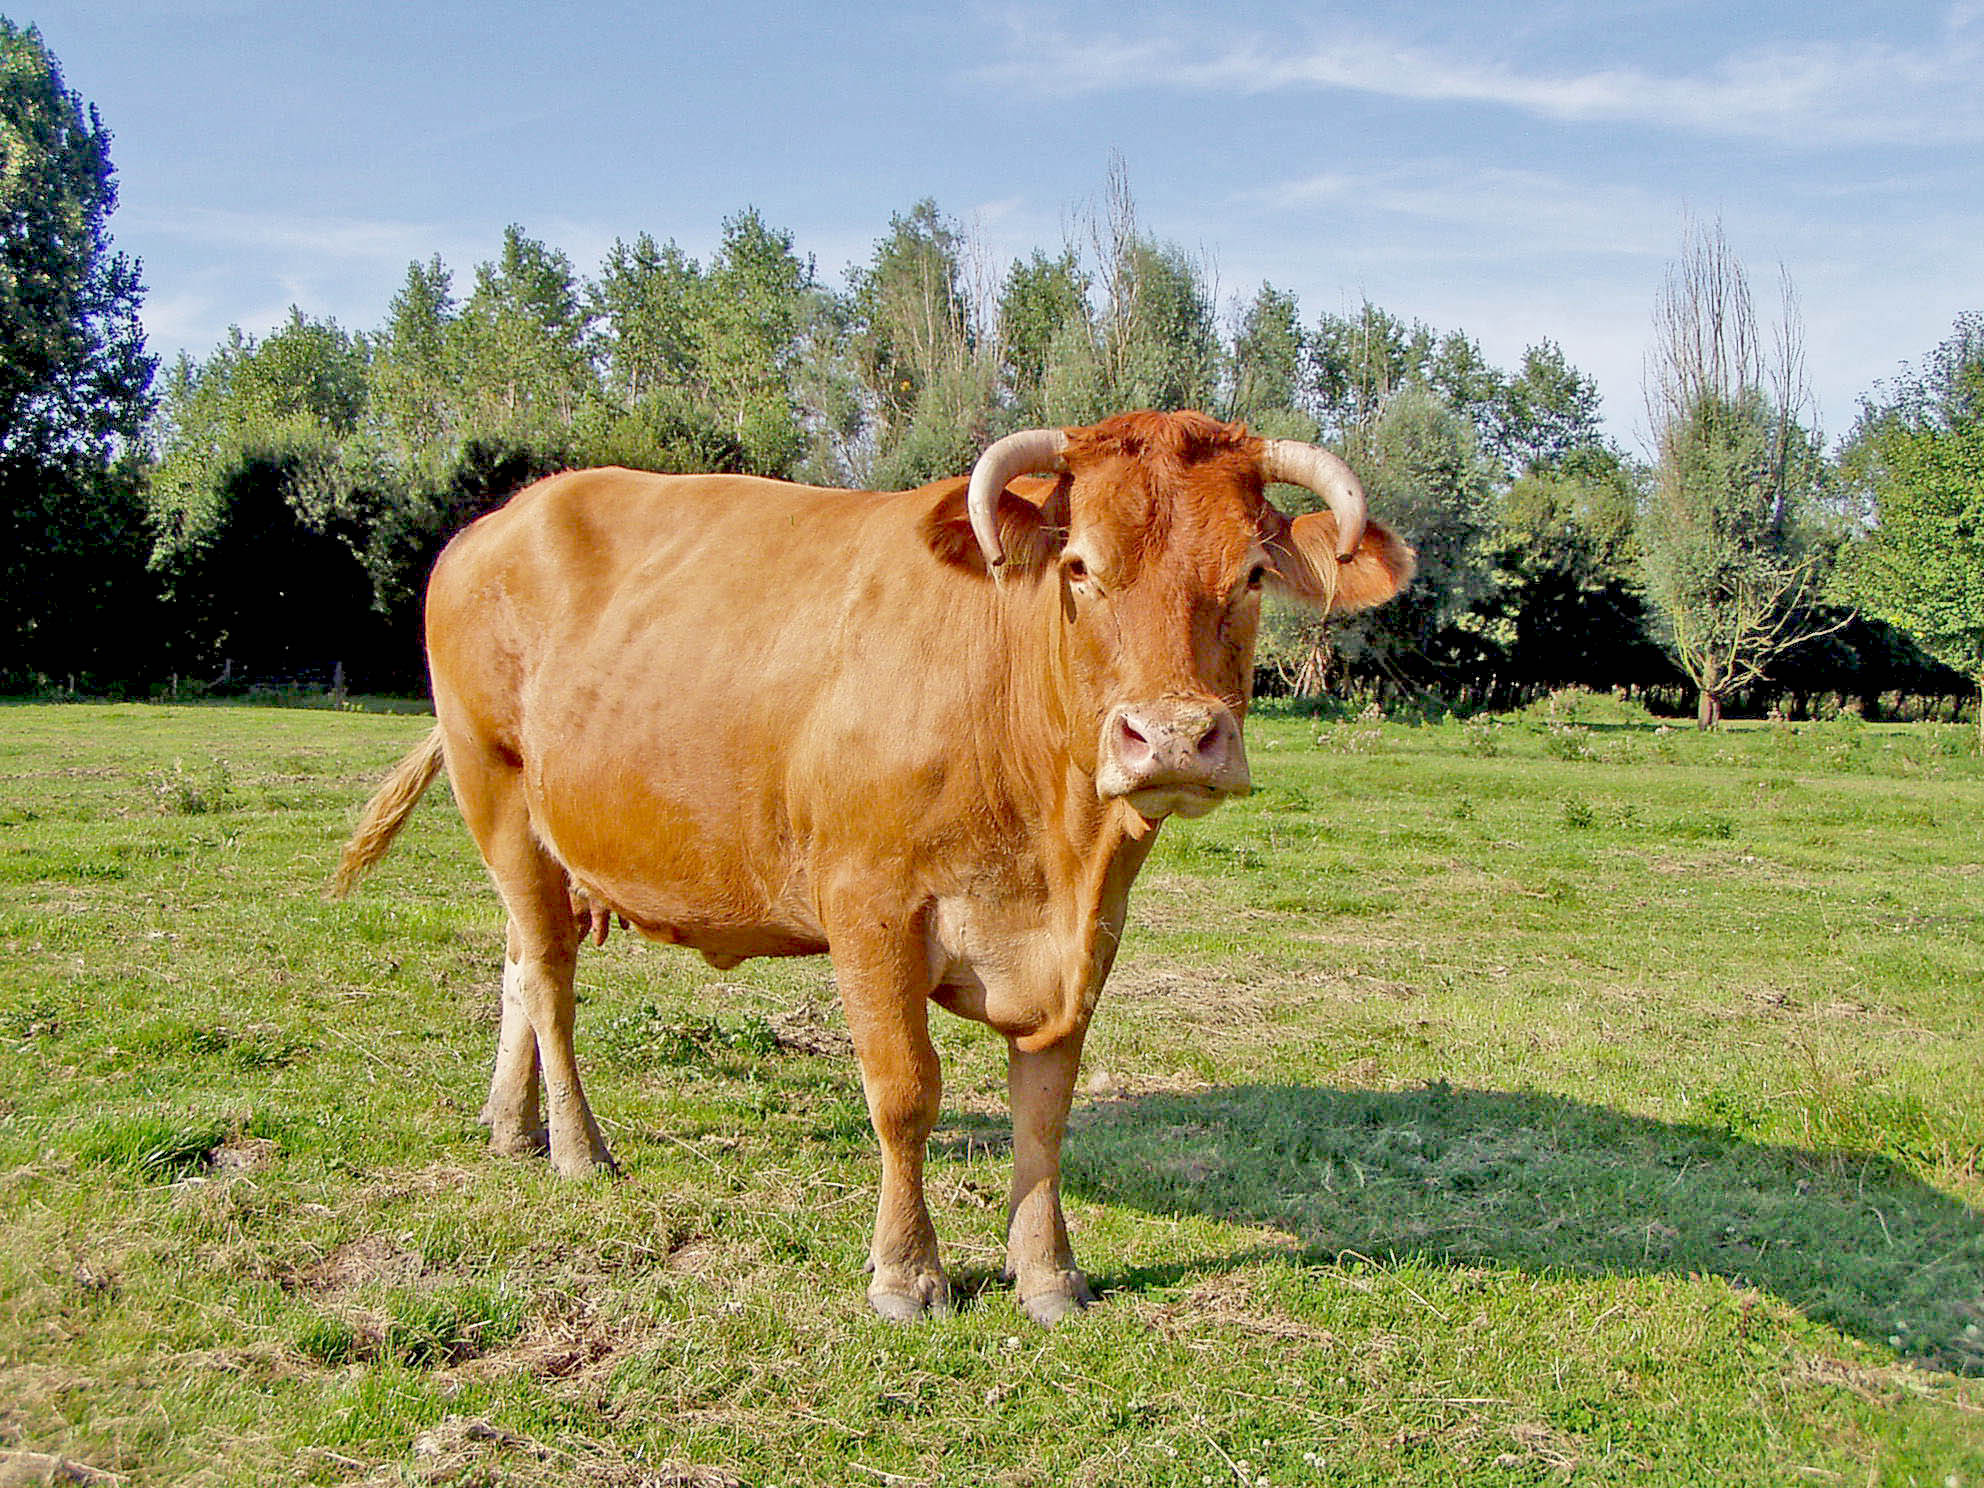 Tsammalex Bos Taurus Cattle